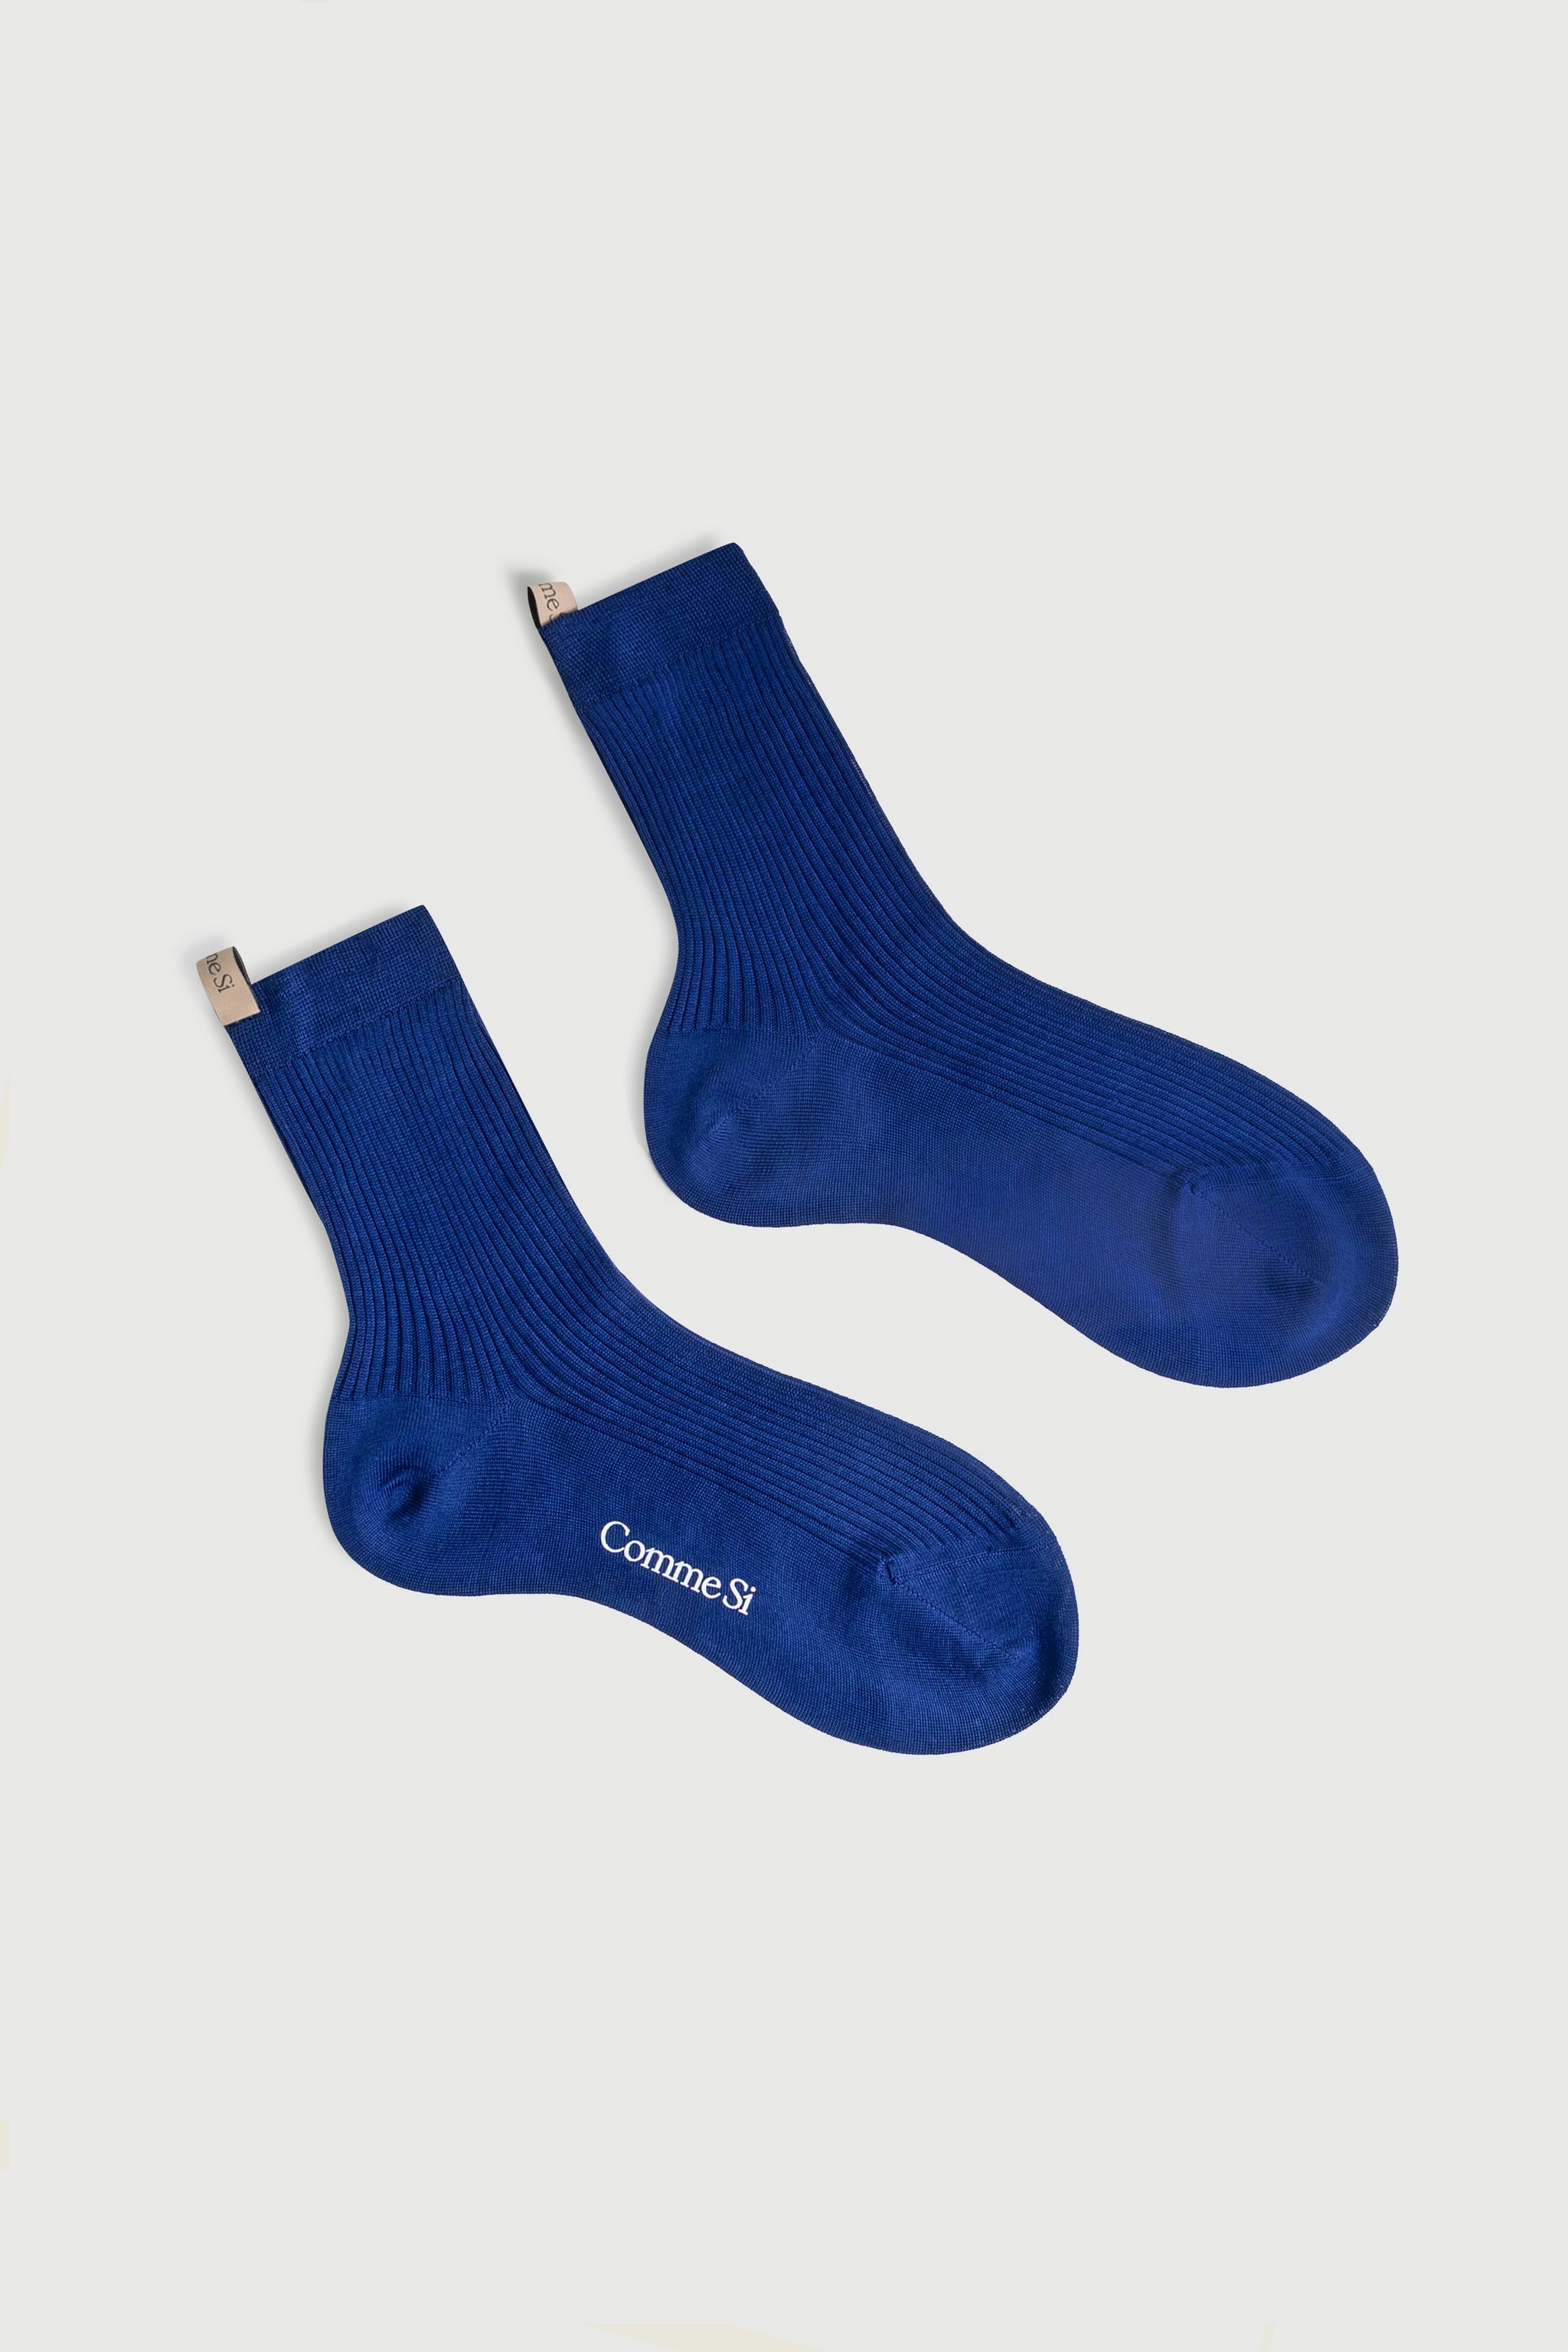 The Agnelli Sock in Varsity Blue, Egyptian Cotton